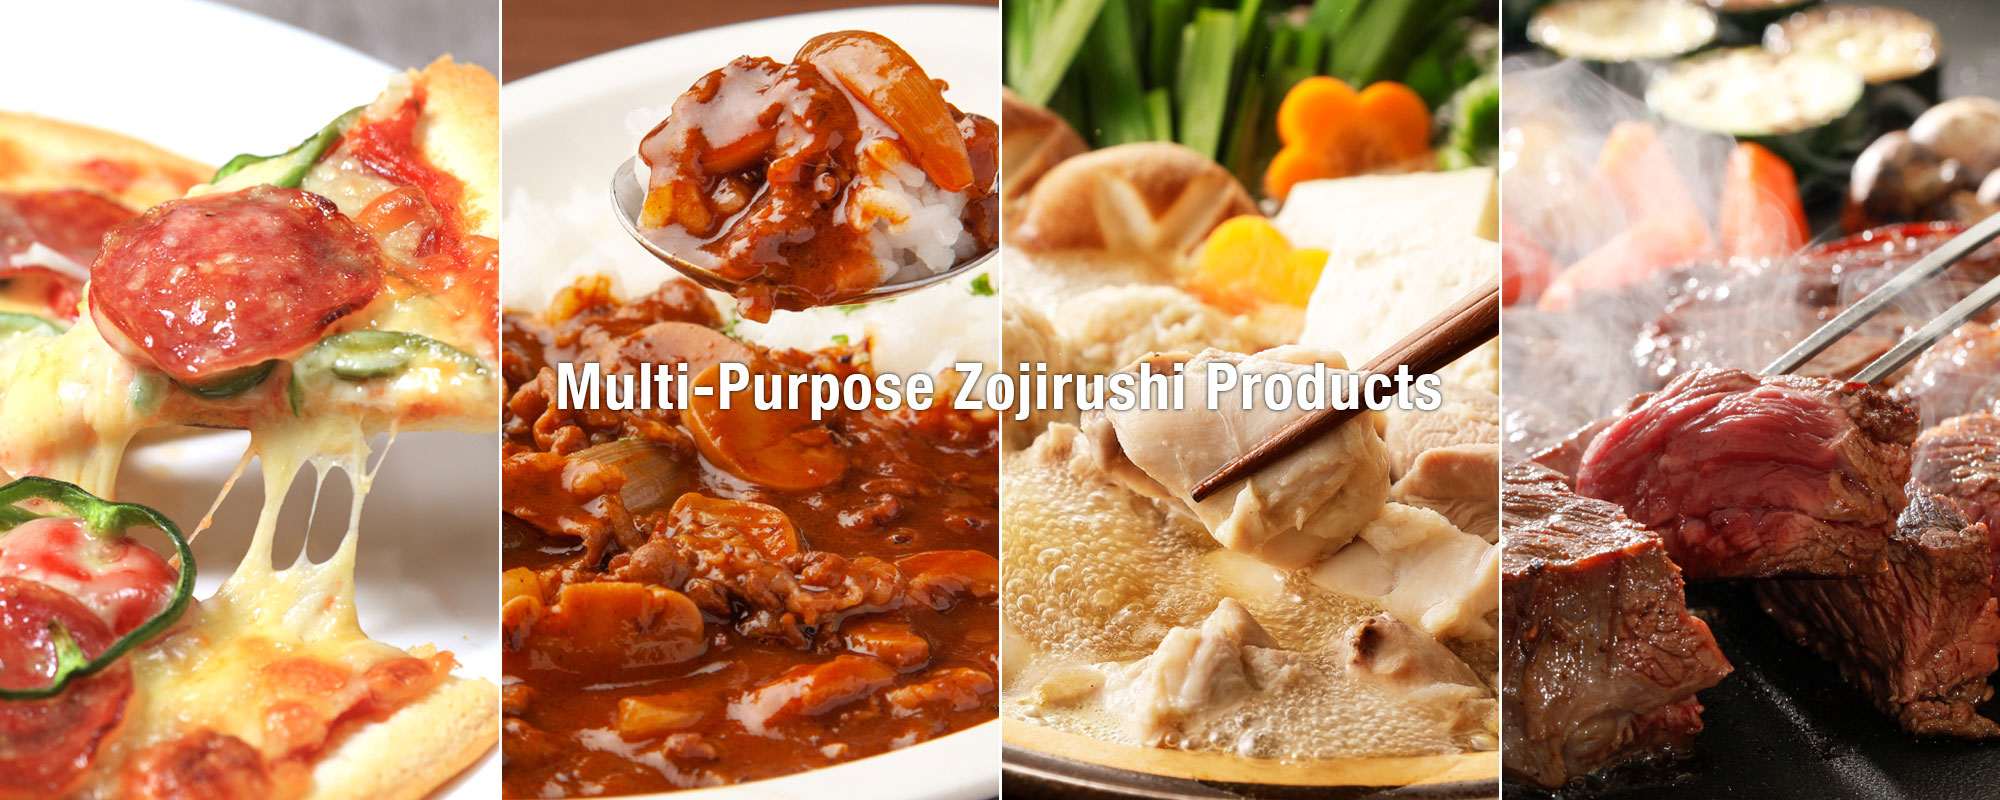 Multi-Purpose Zojirushi Products